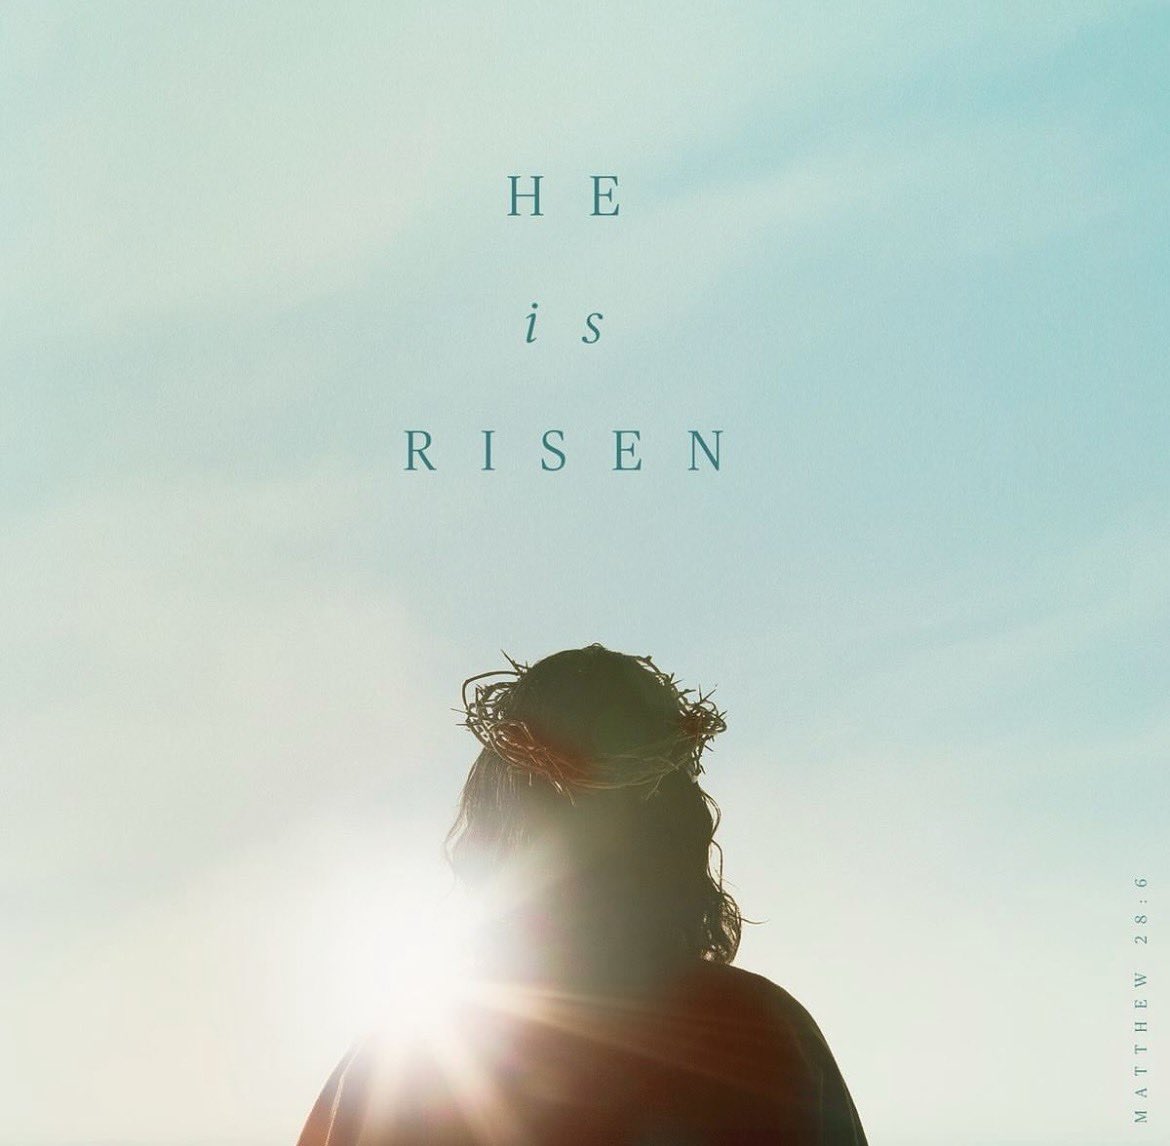 He is Risen, indeed! Happy Easter!